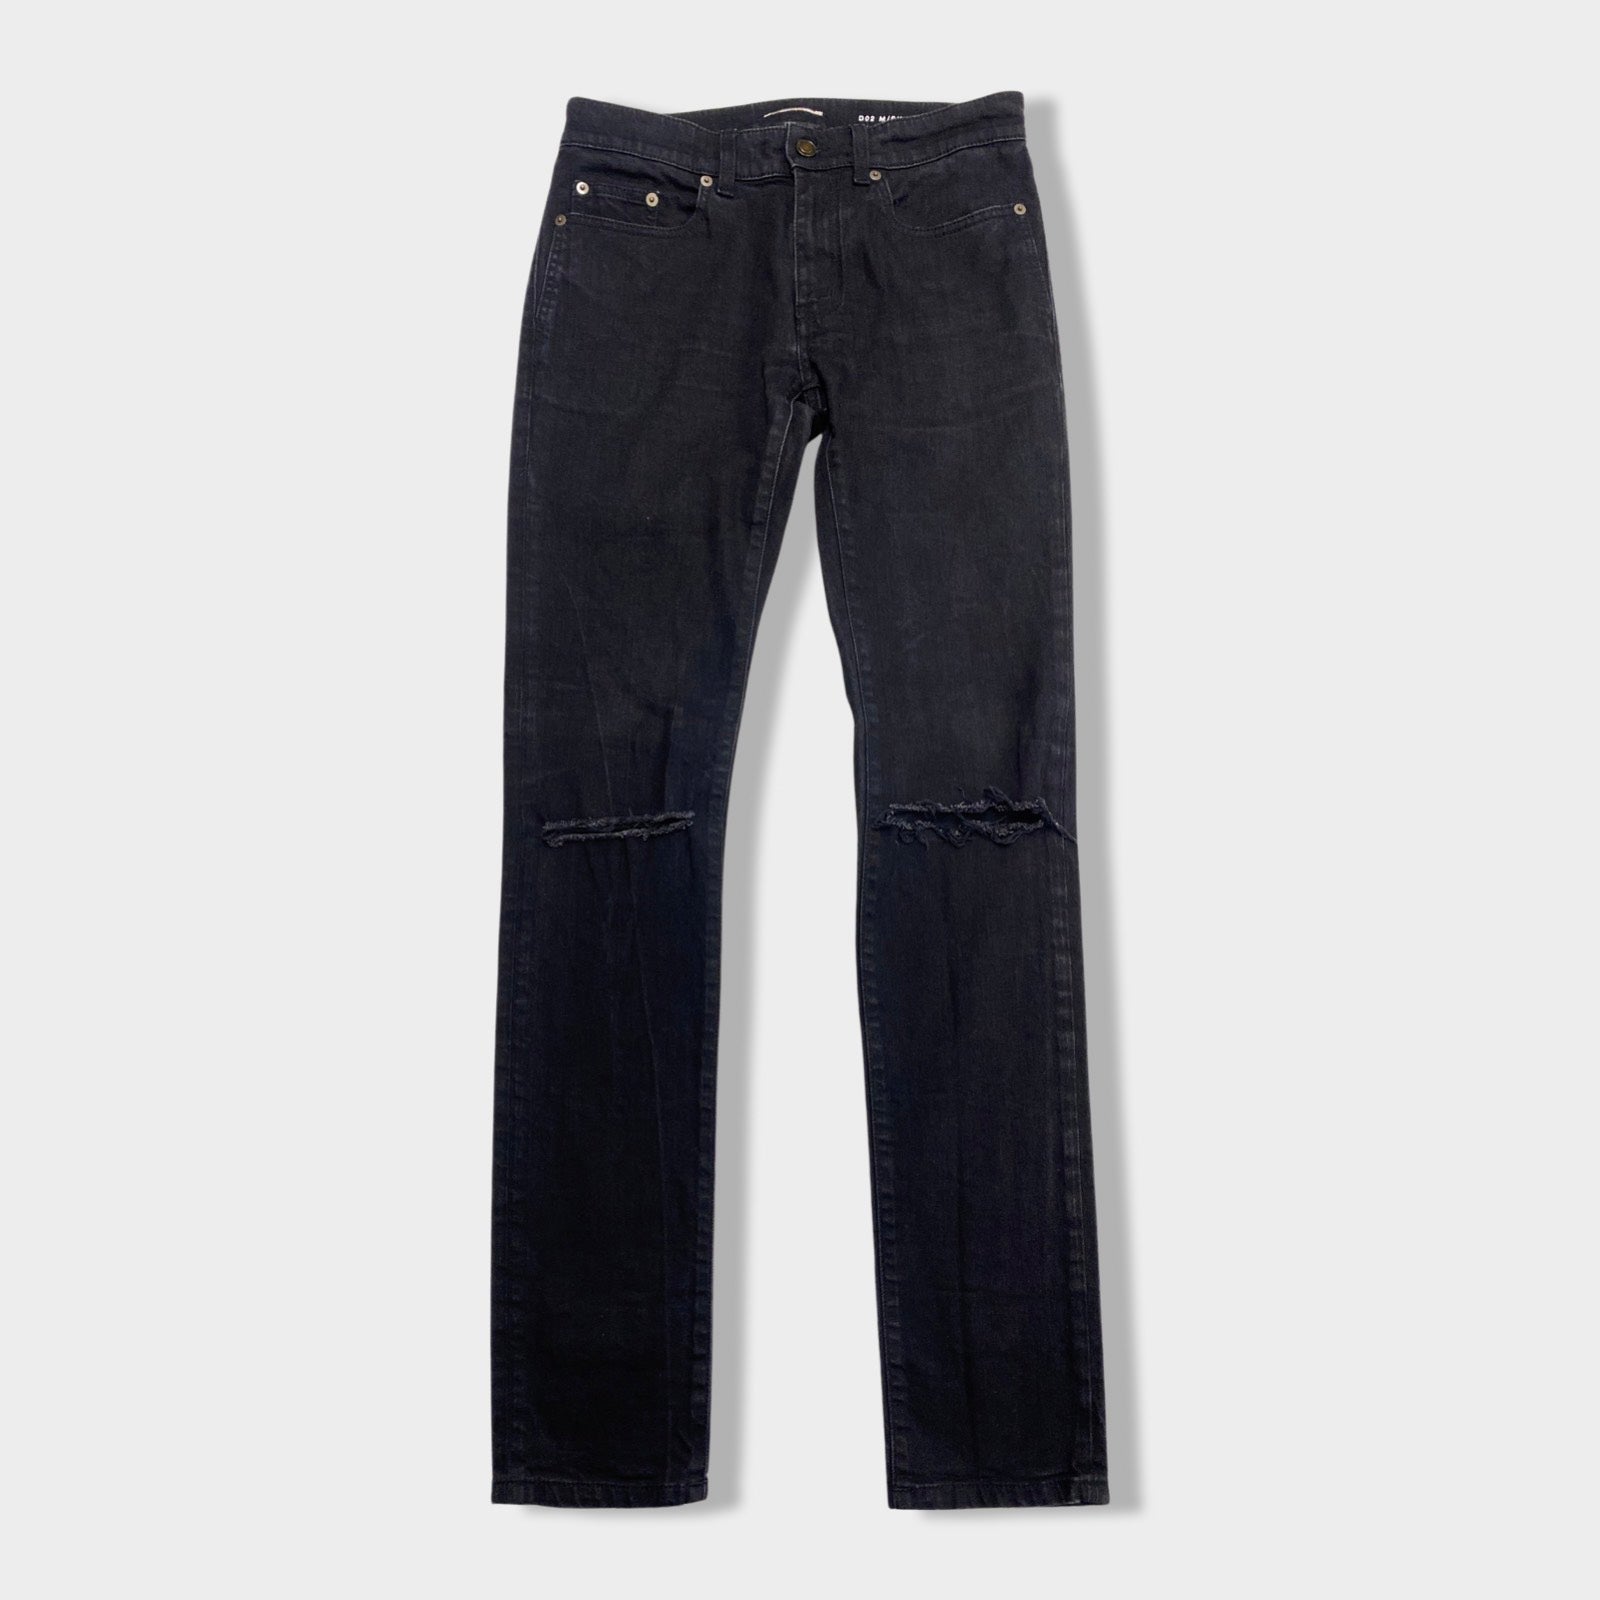 Ripped Jeans for Men - Buy Torn / Knee Burst Jeans & Ripped Skinny Jeans  online at best prices - Flipkart.com